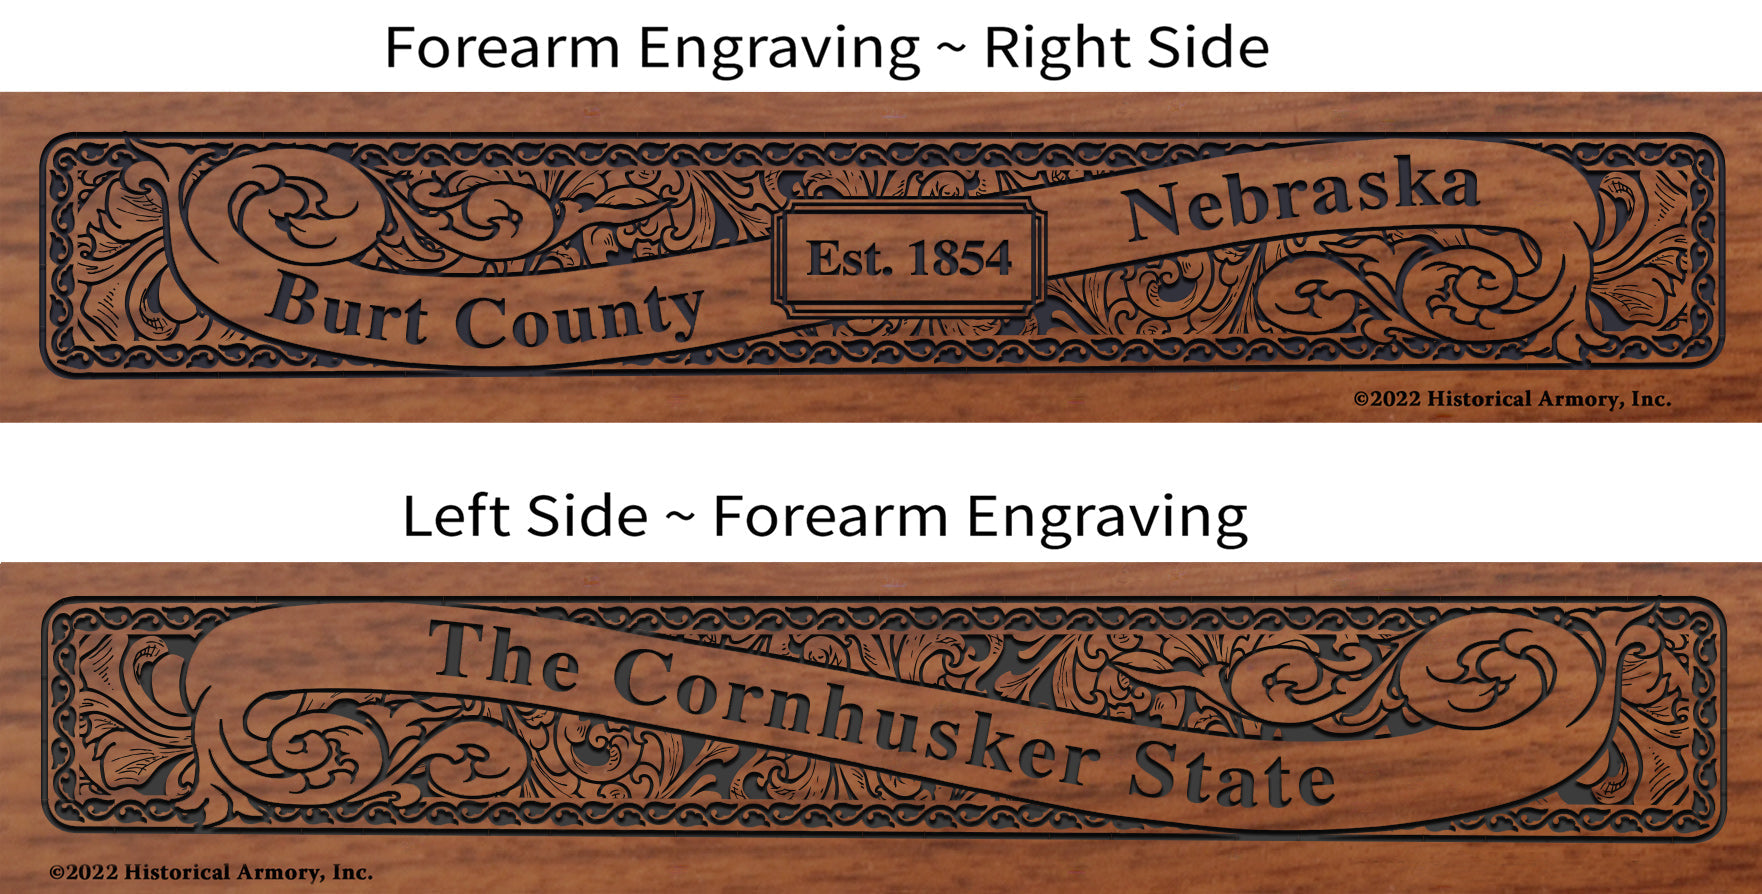 Burt County Nebraska Engraved Rifle Forearm